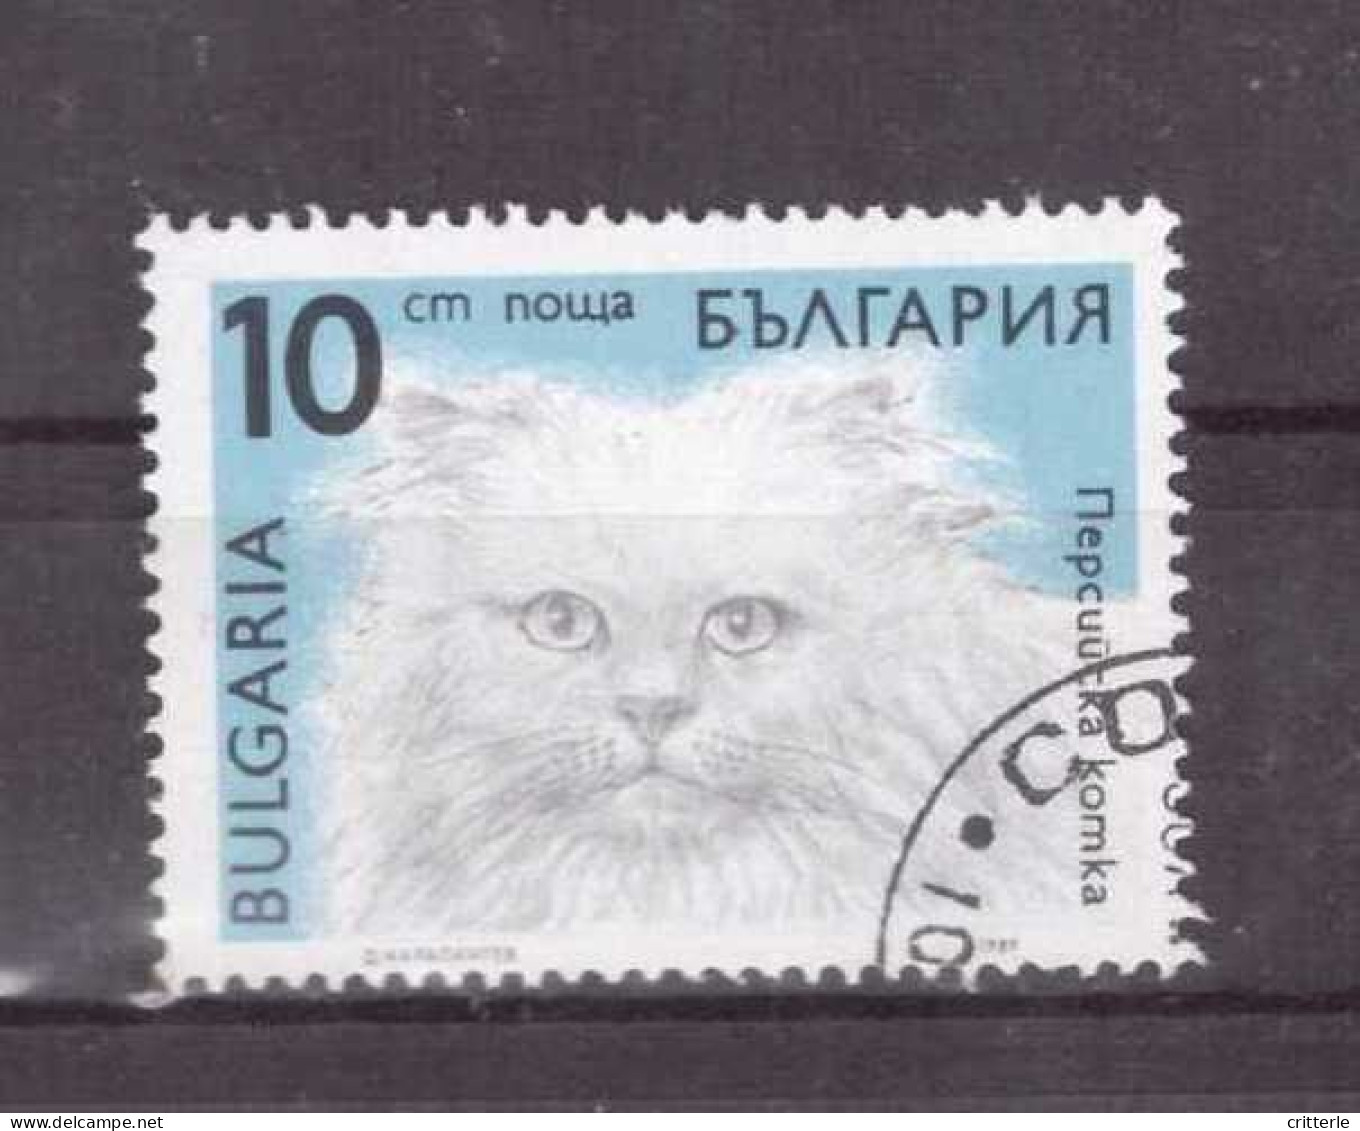 Bulgarien Michel Nr. 3812 Gestempelt (1,2,3) - Usati